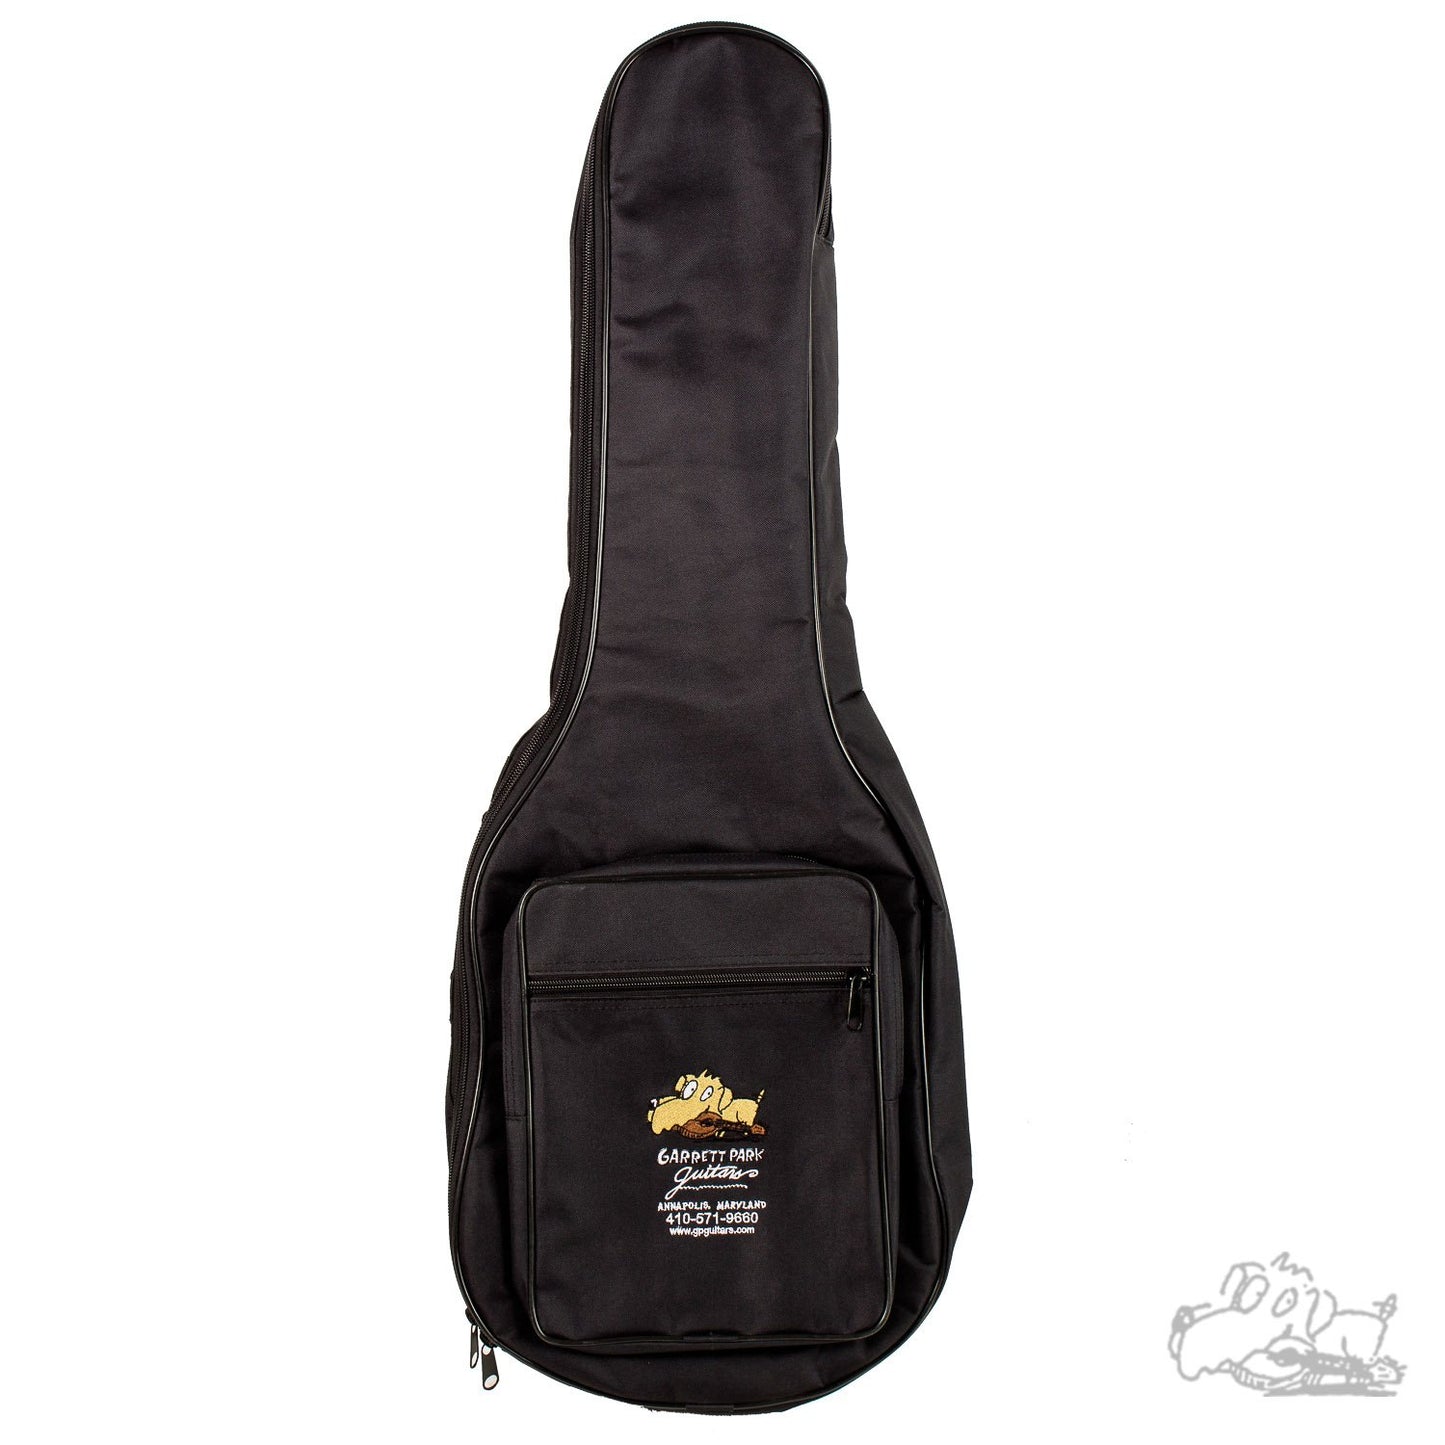 Garrett Park Guitars Embroidered Standard Electric Guitar Nylon Soft Case Gig Bag